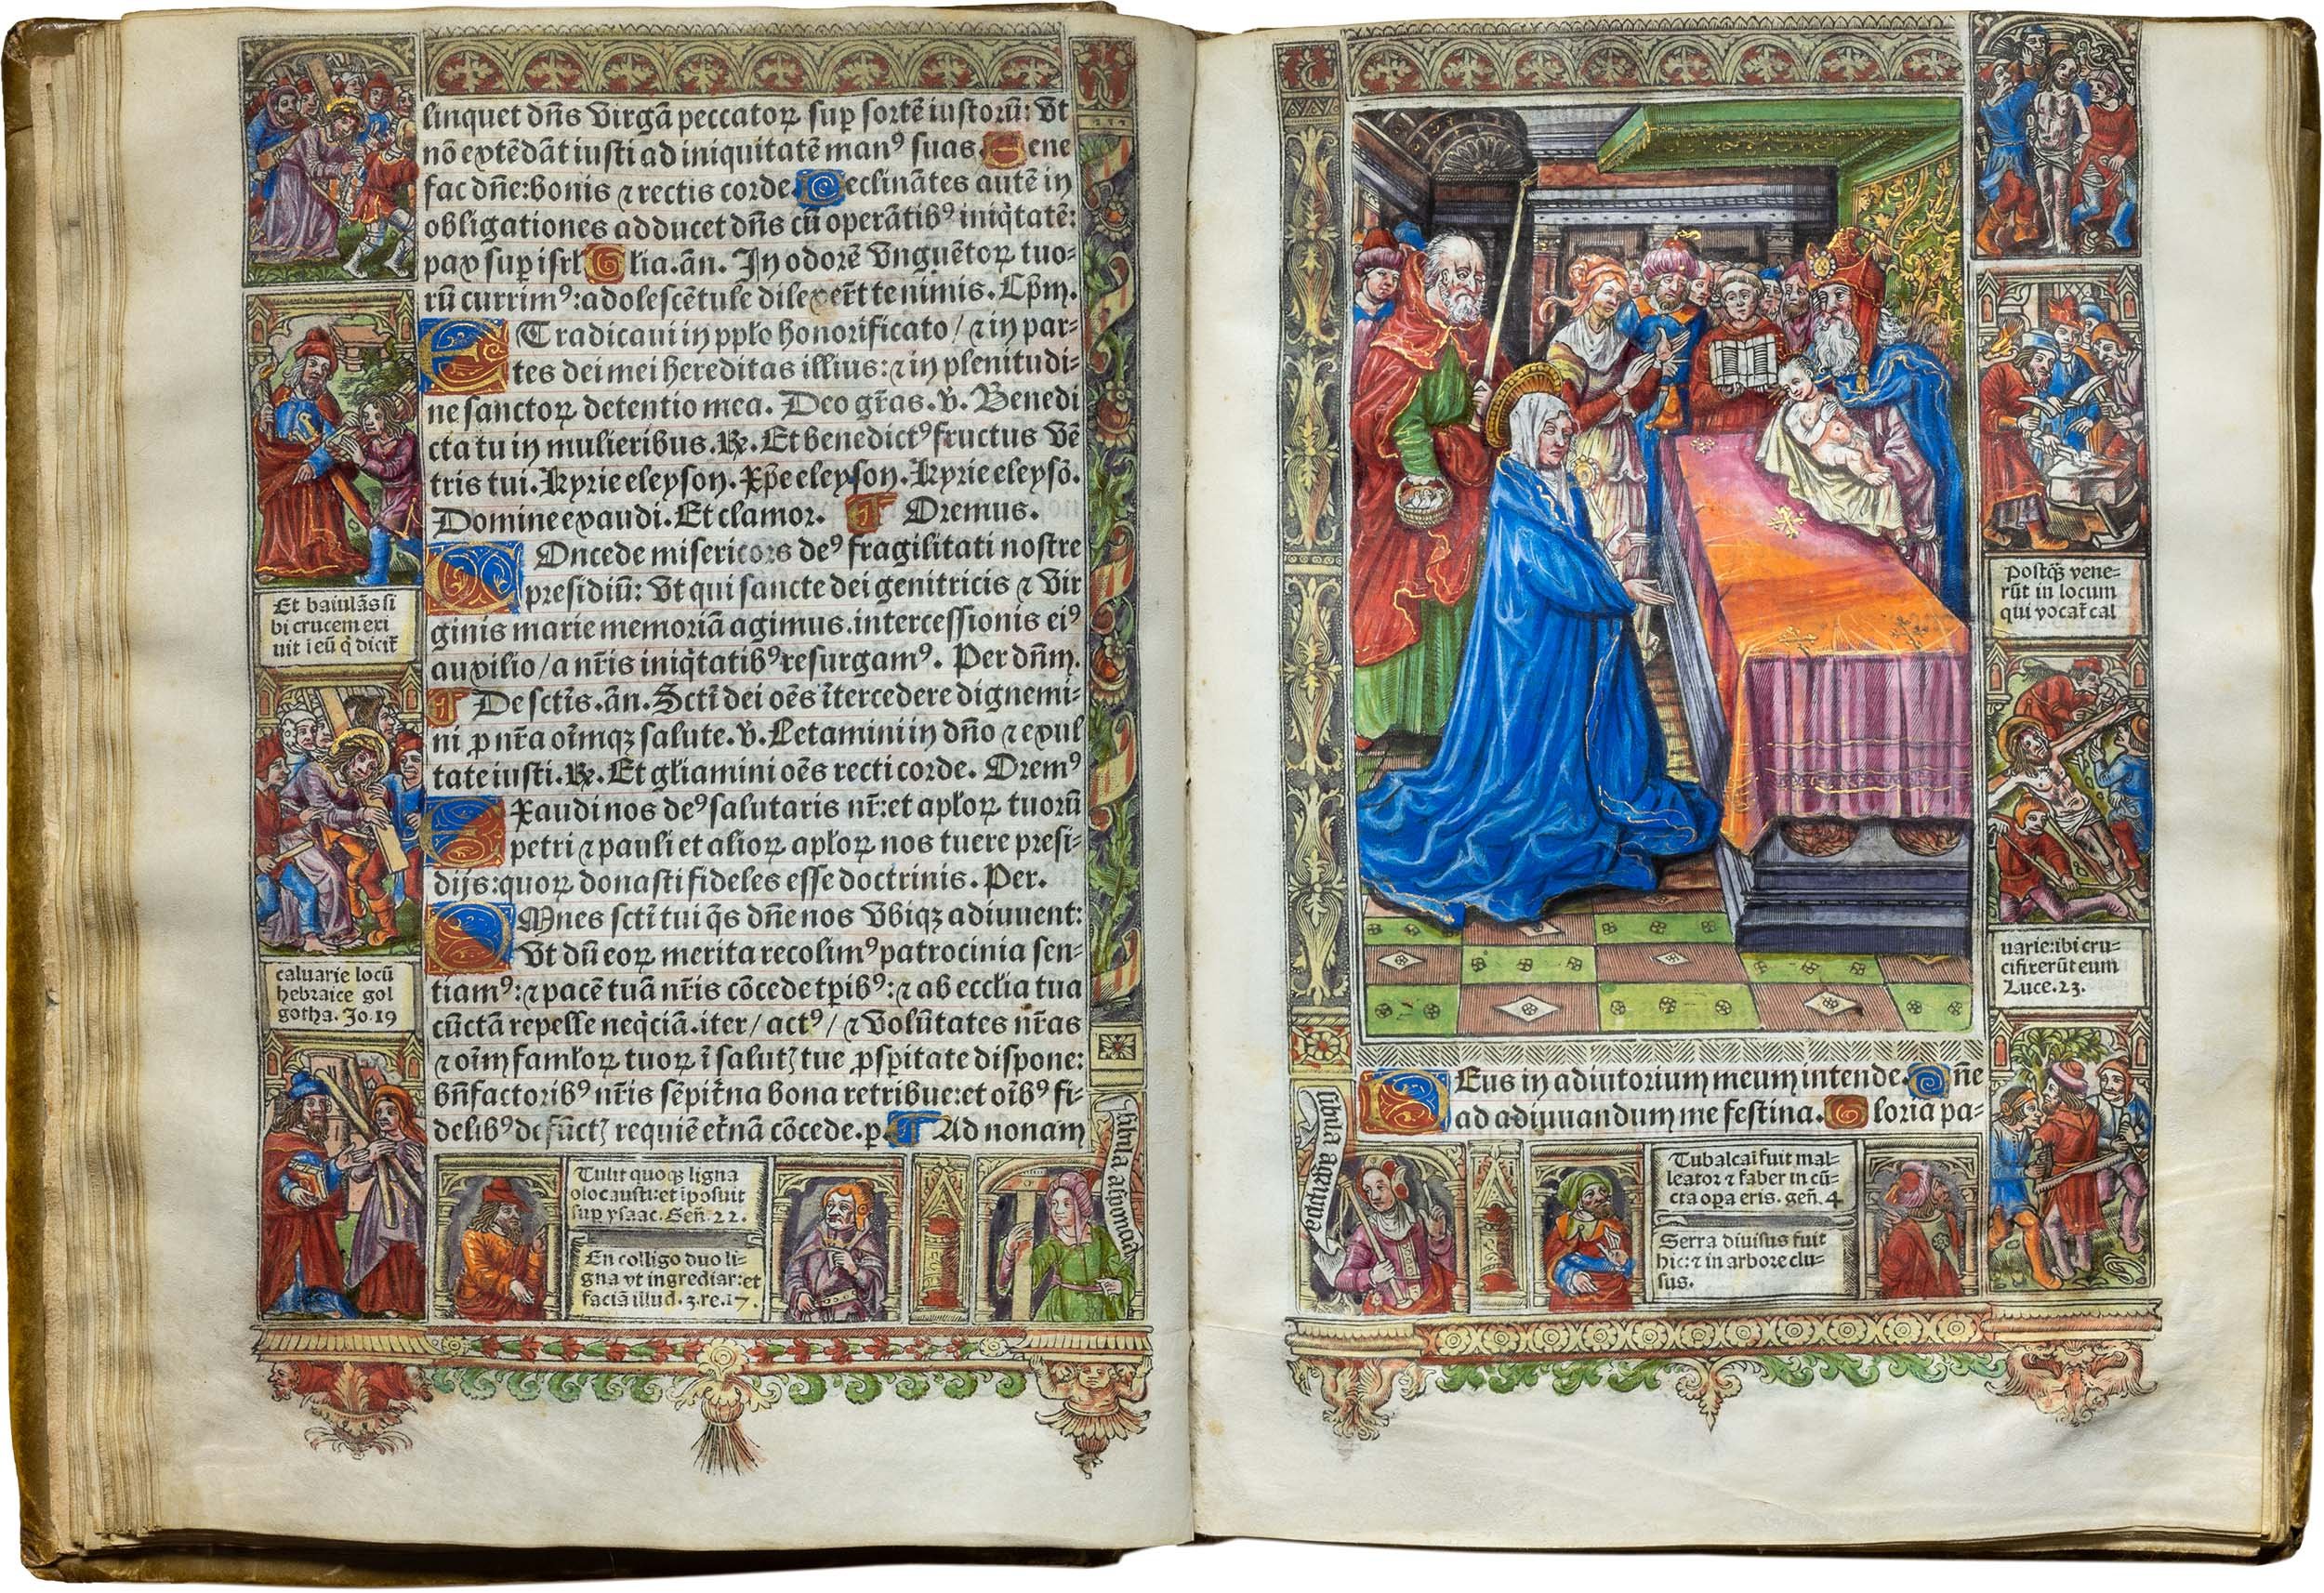 Horae-bmv-31-march-1511-kerver-printed-book-of-hours-illuminated-copy-vellum-34.jpg